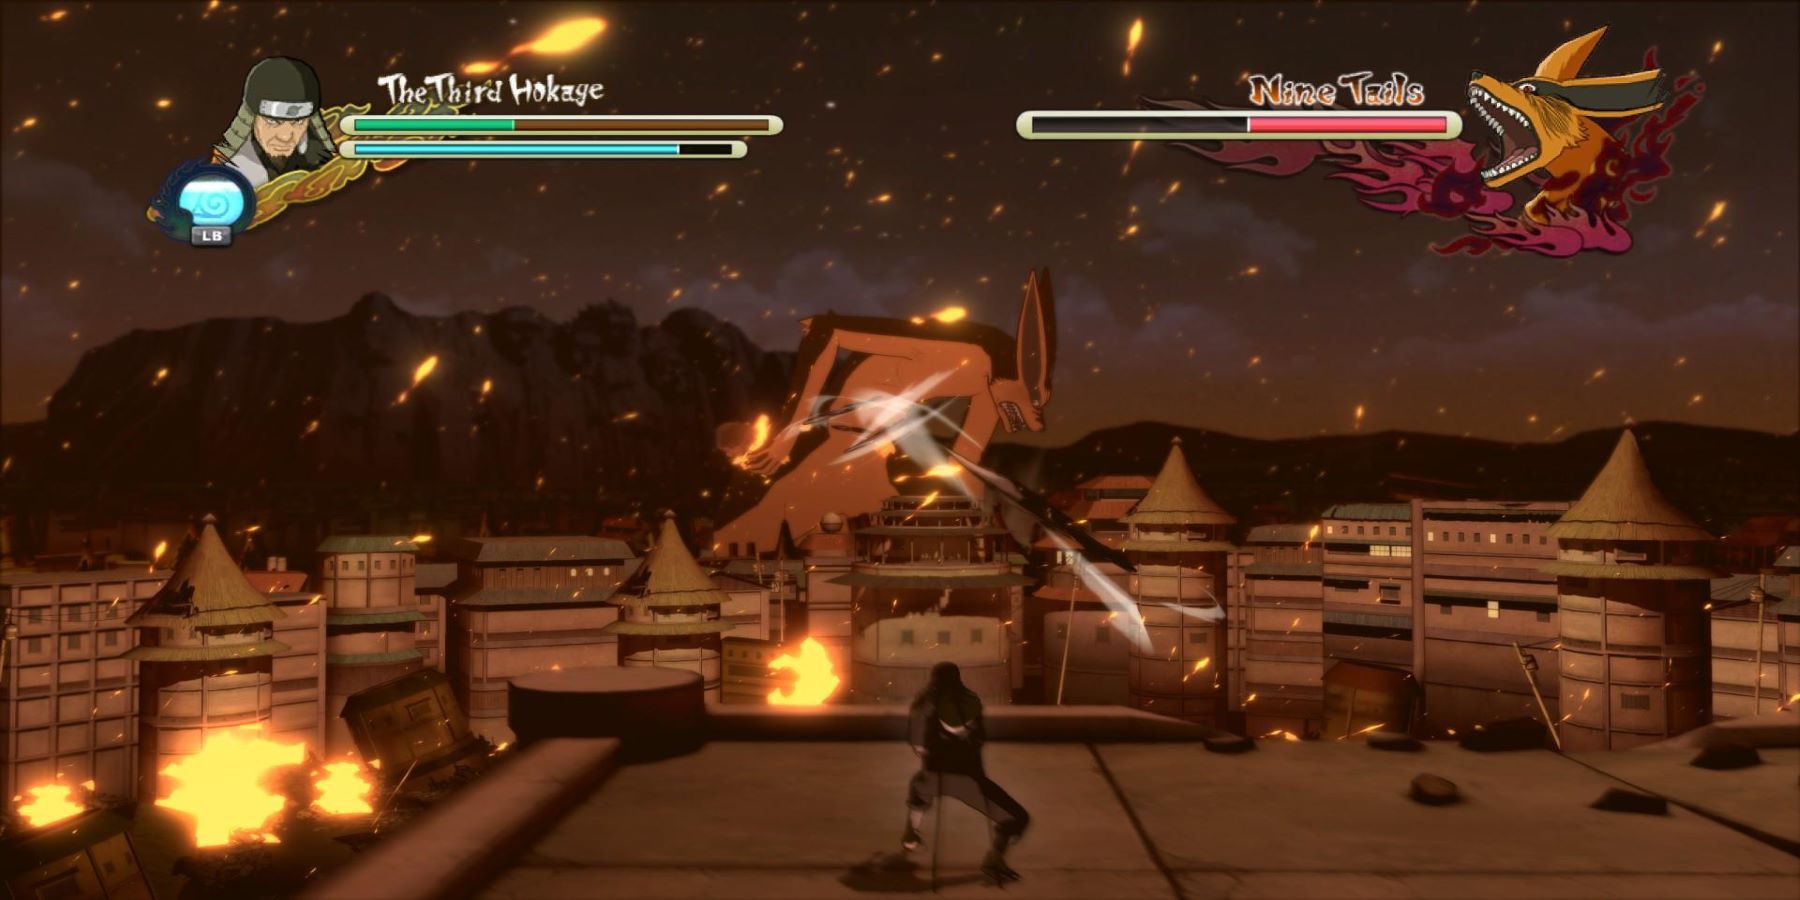 2013's Naruto Shippuden: Ultimate Ninja Storm 3 video game.